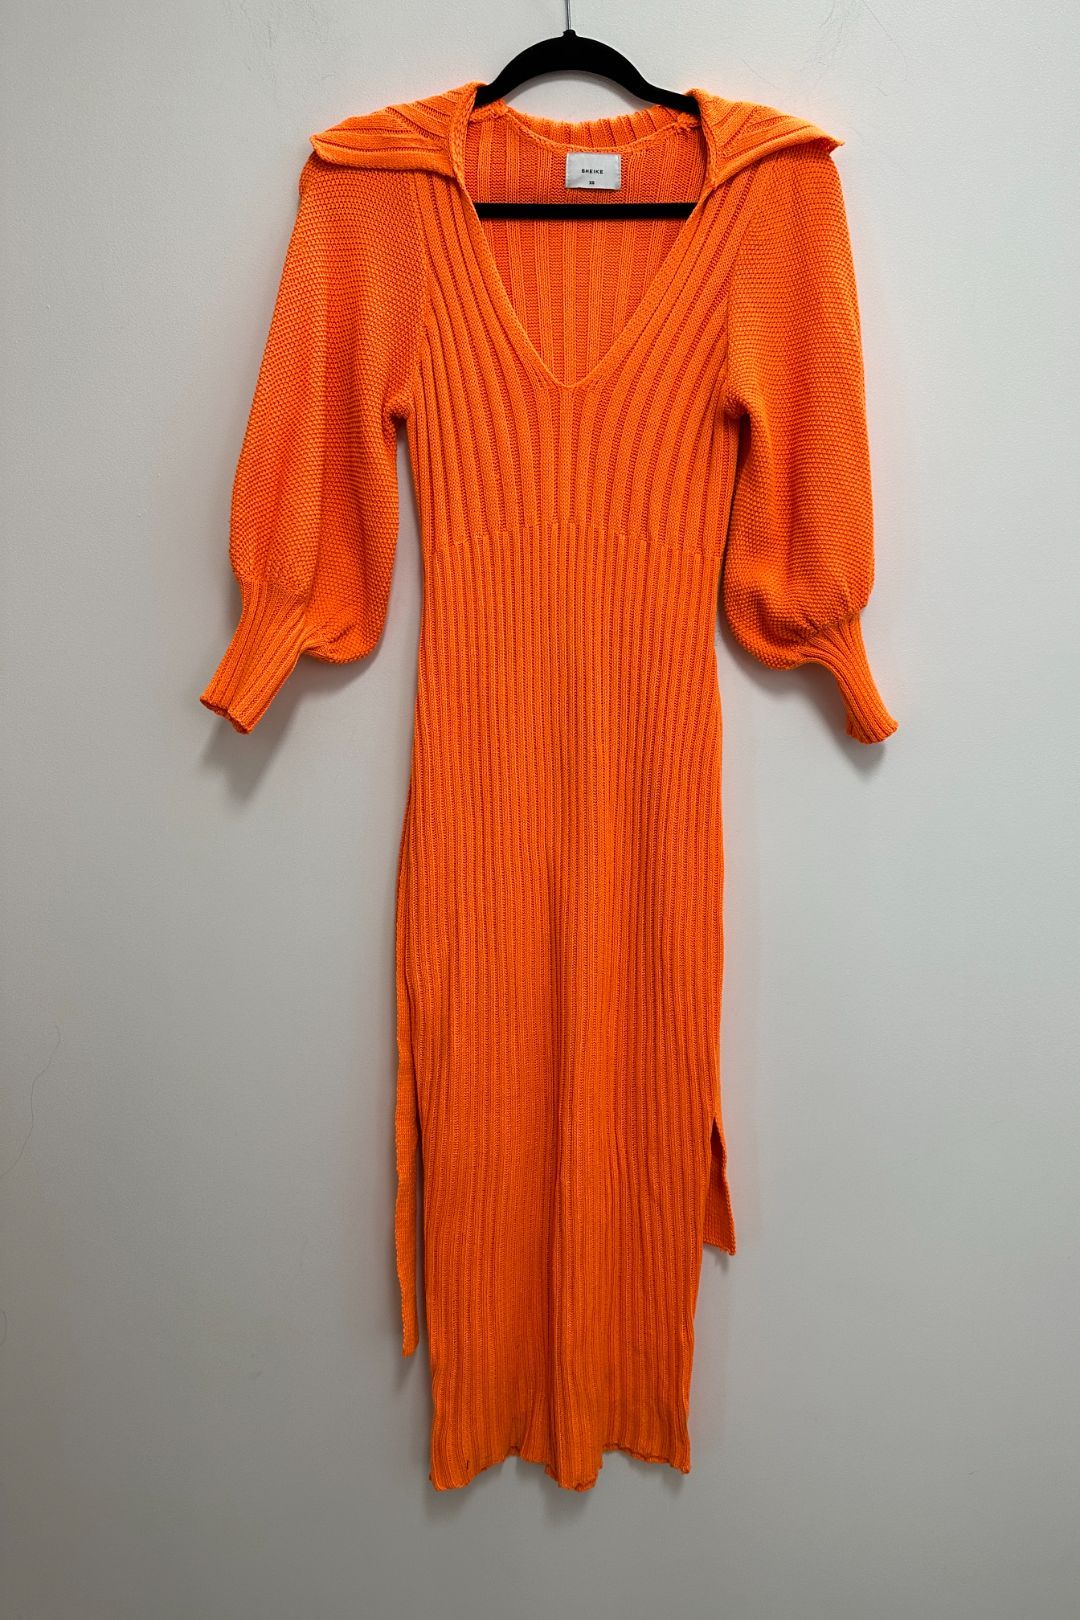 Sheike Lillian Knit Midi Dress in Orange